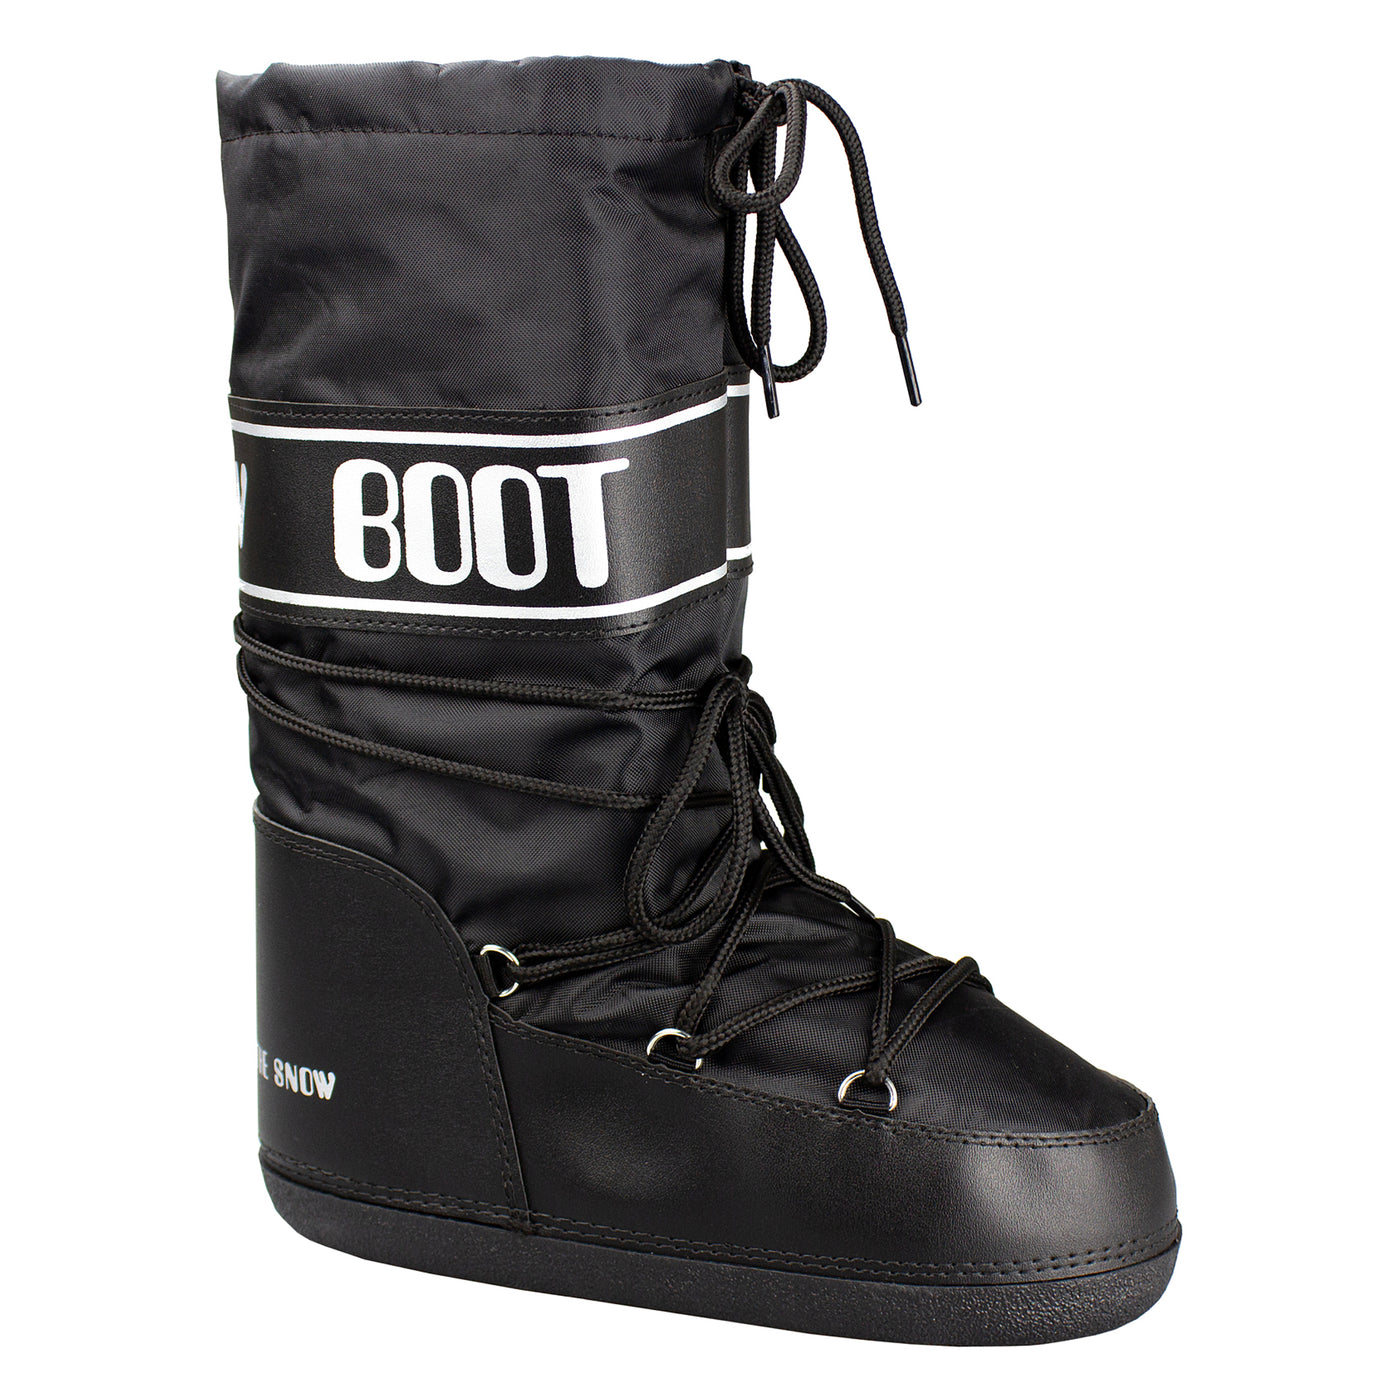 Manbi Adult Snow Boot Black